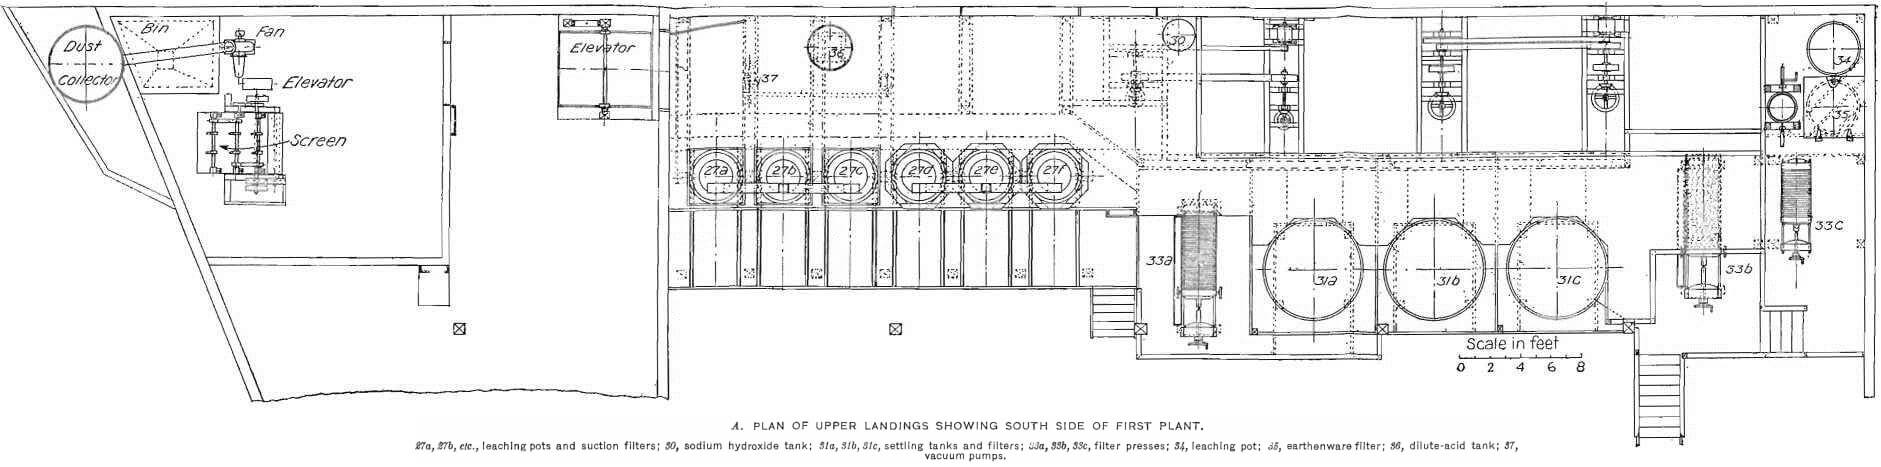 plan of upper landing